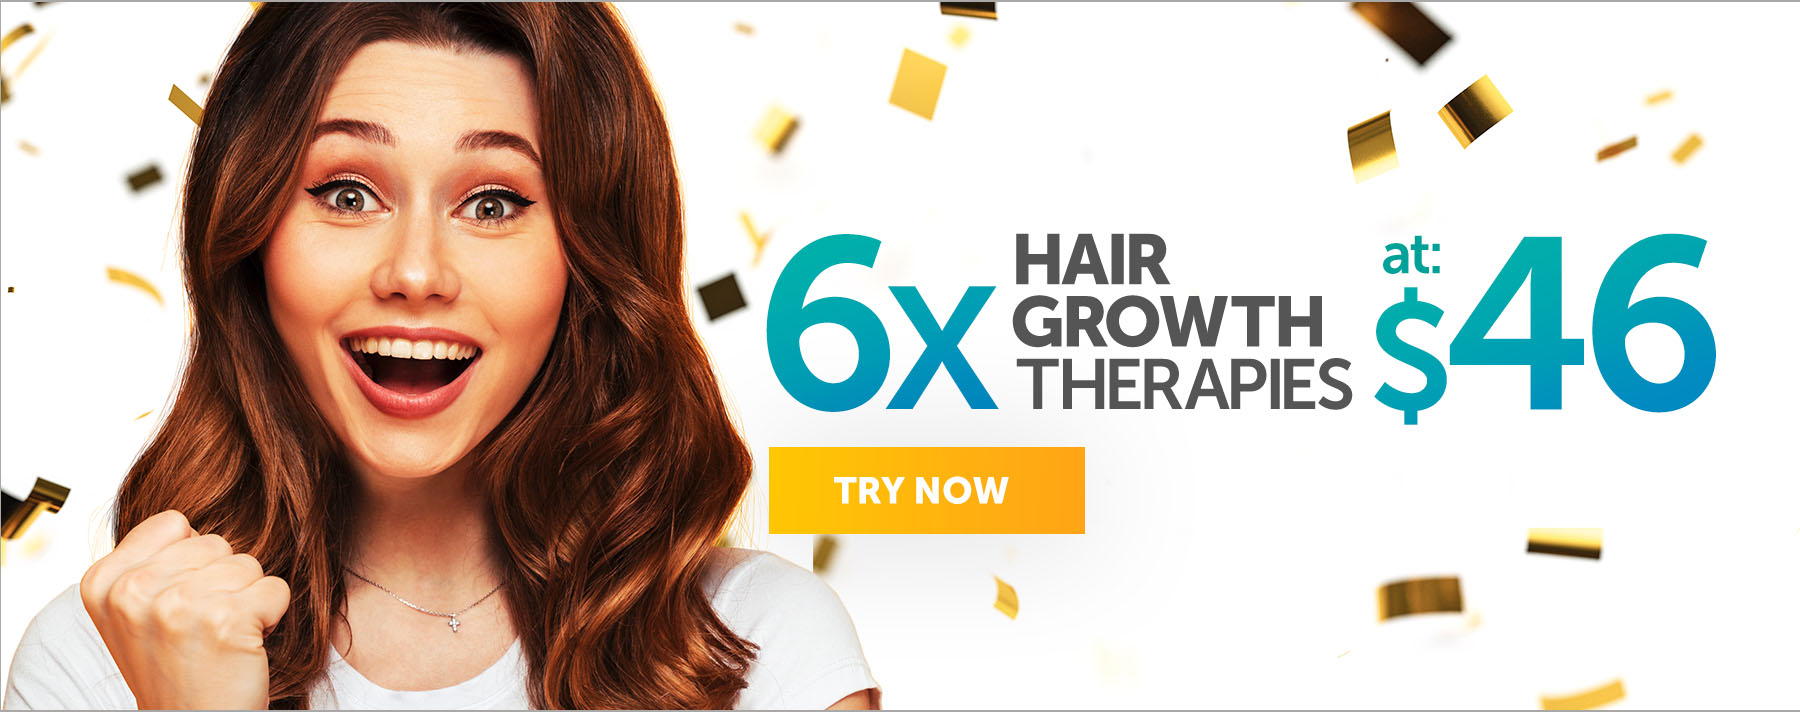 6x Hair Growth Therapies at $46